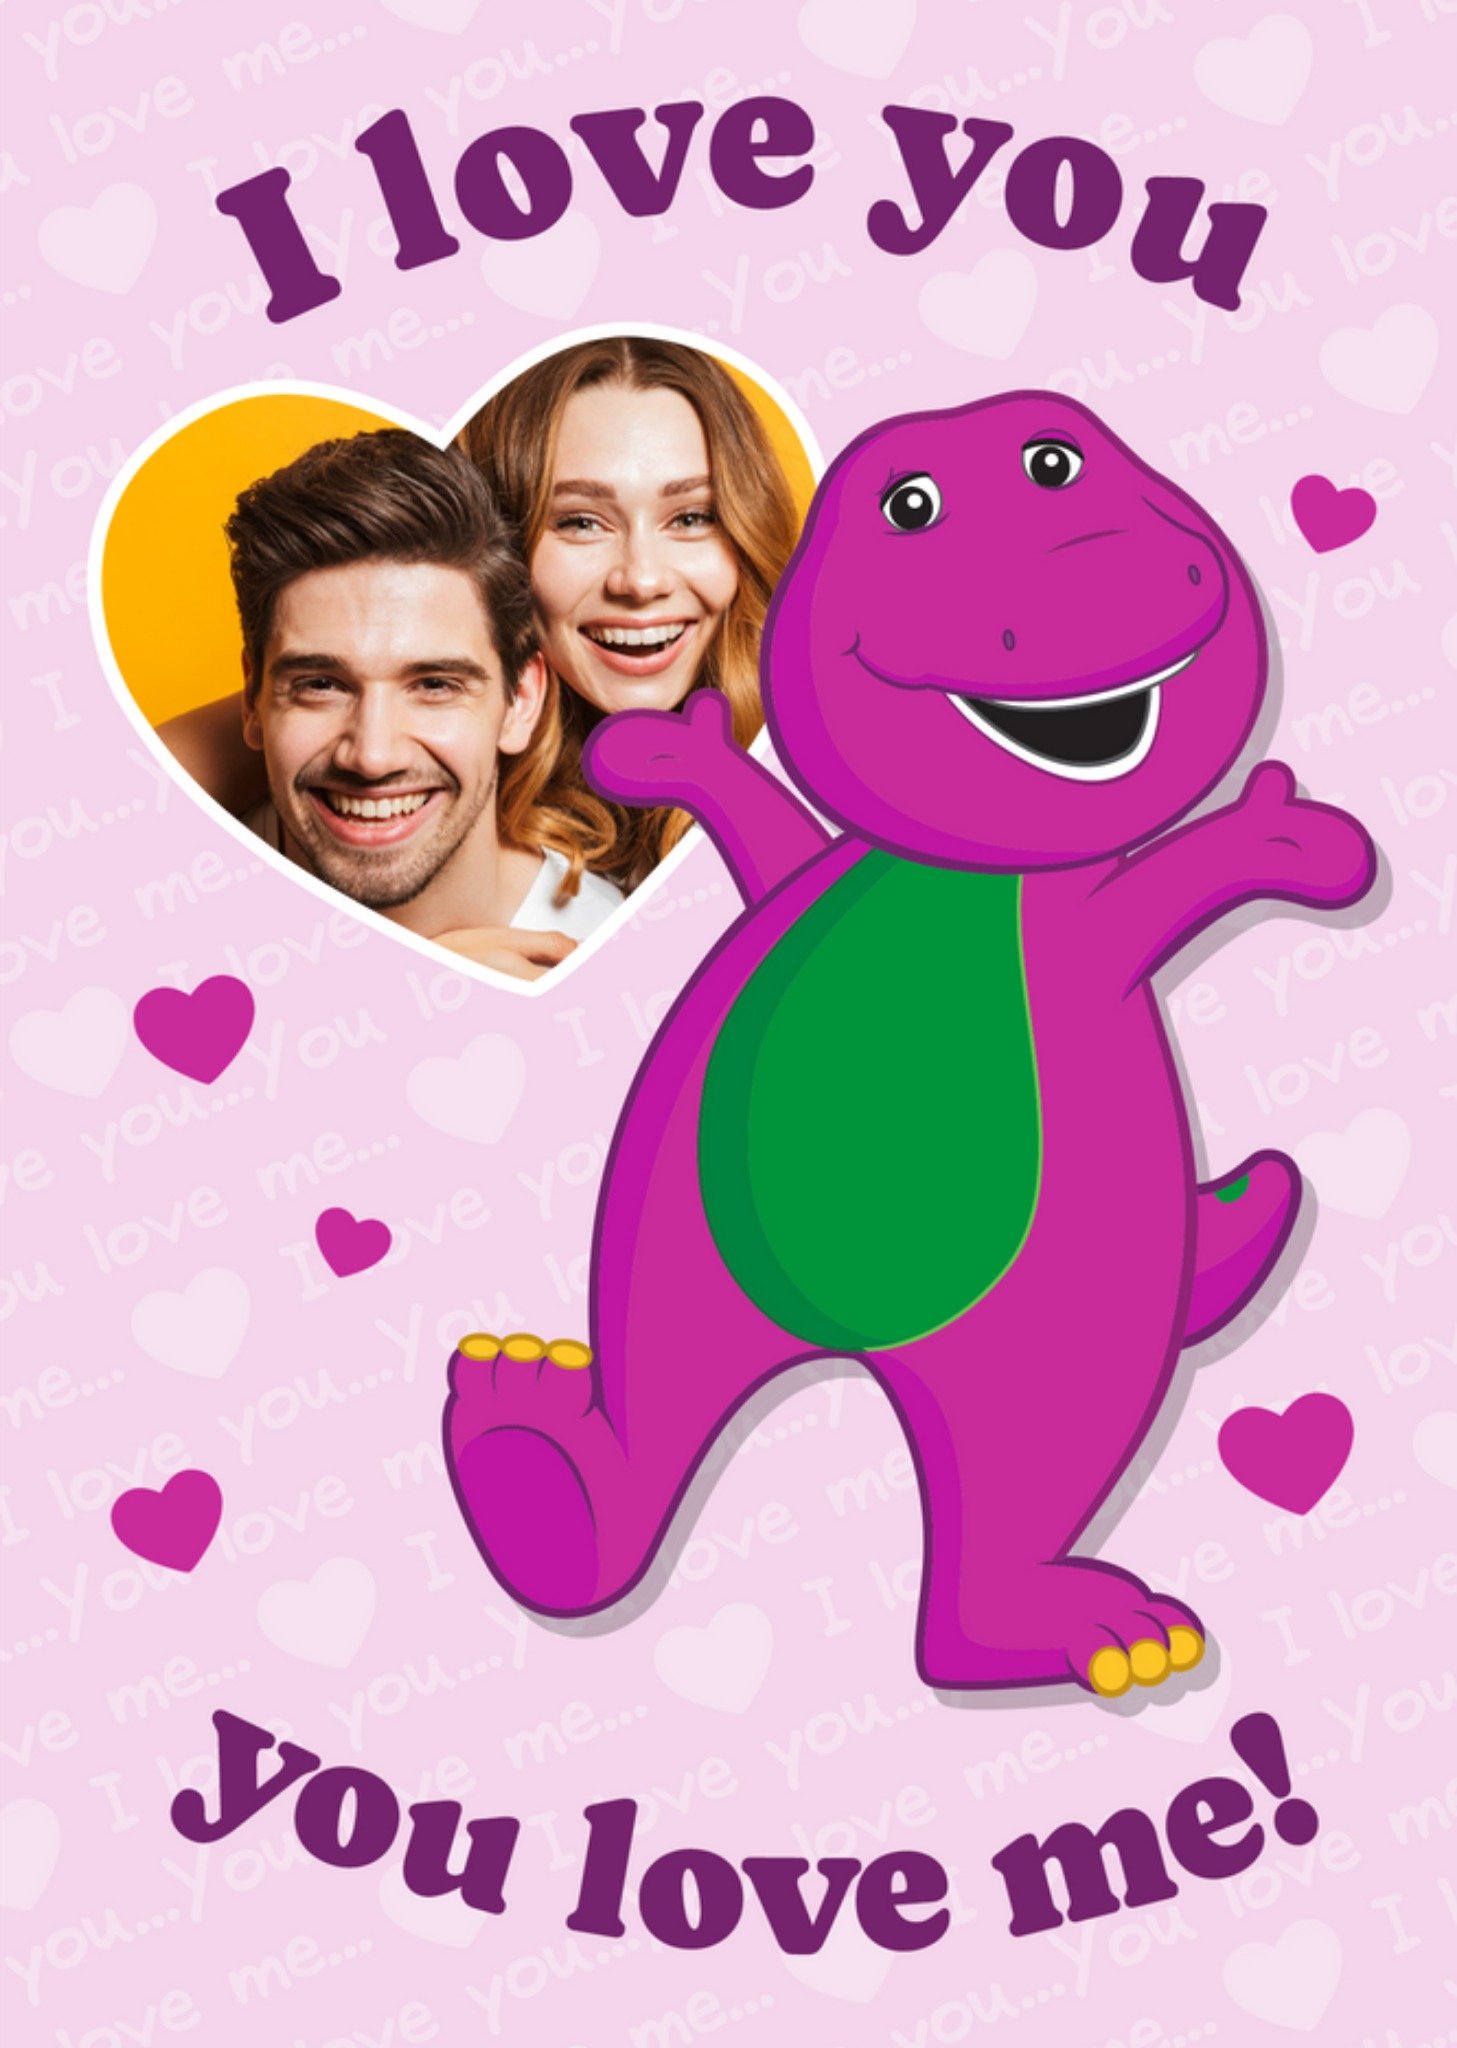 Mattel Barney The Dinosaur I Love You You Love Me Photo Upload Birthday Card, Large